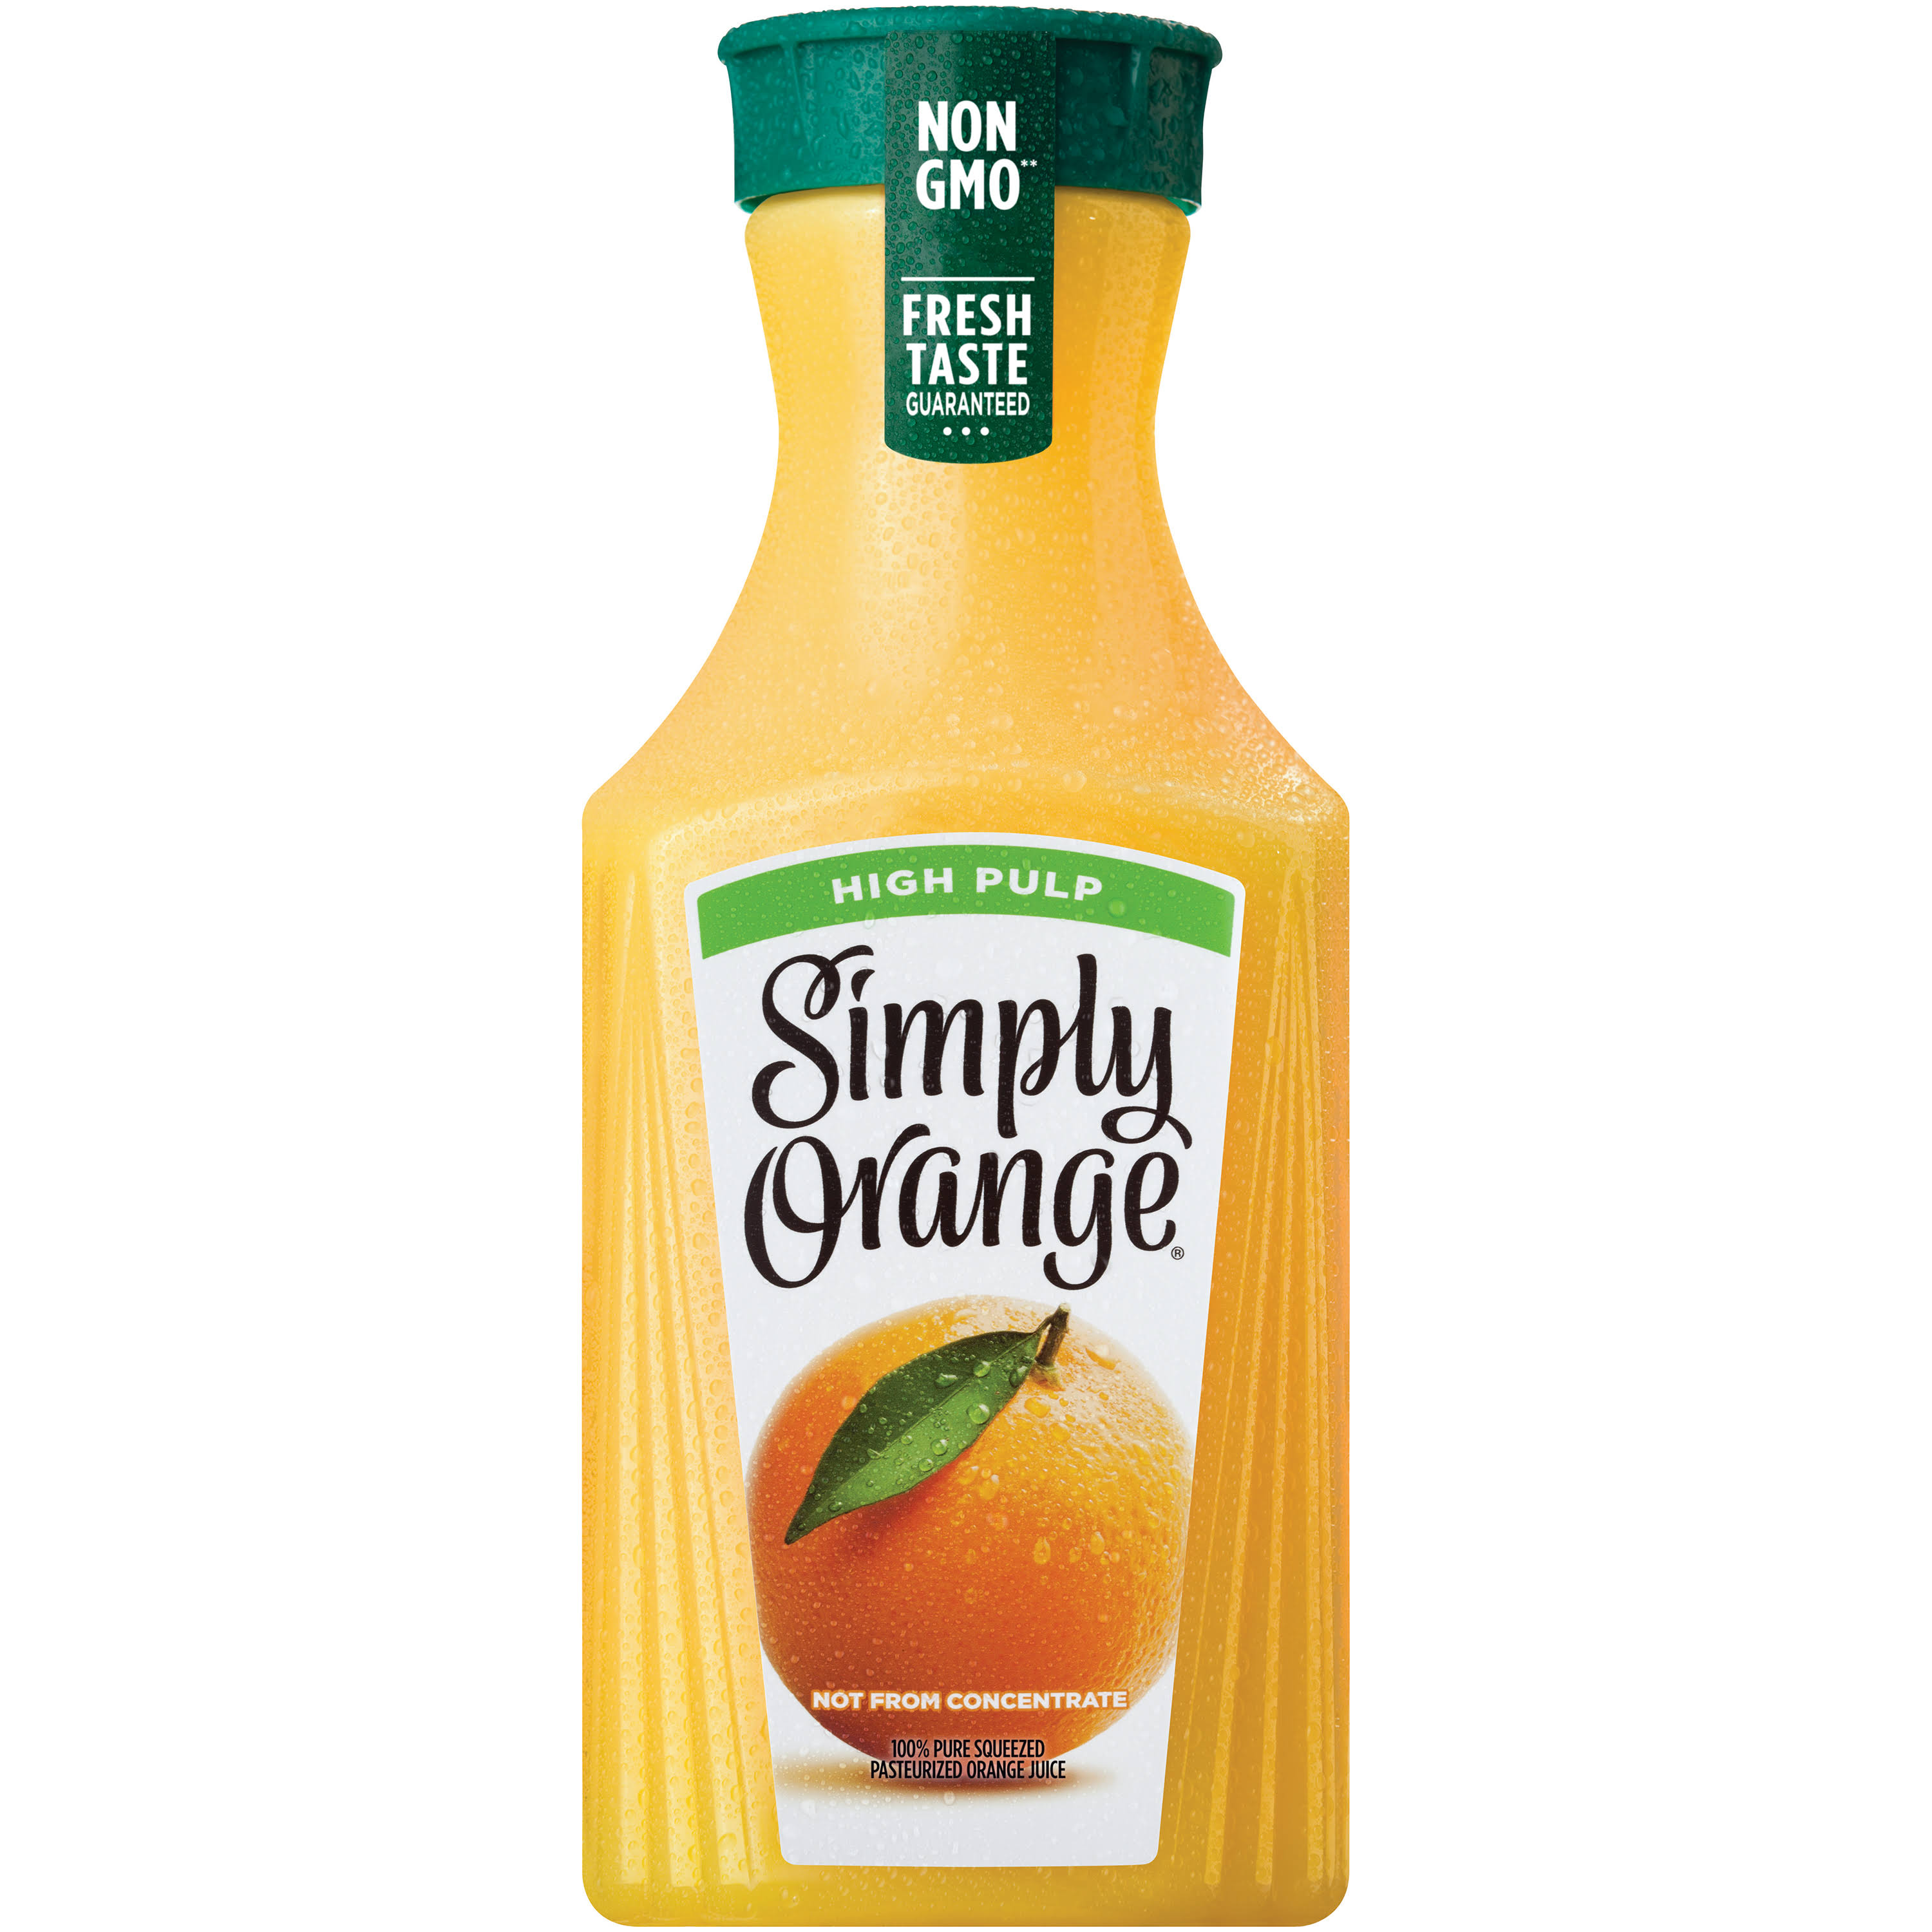 Simply Orange Orange Juice, High Pulp - 52 fl oz